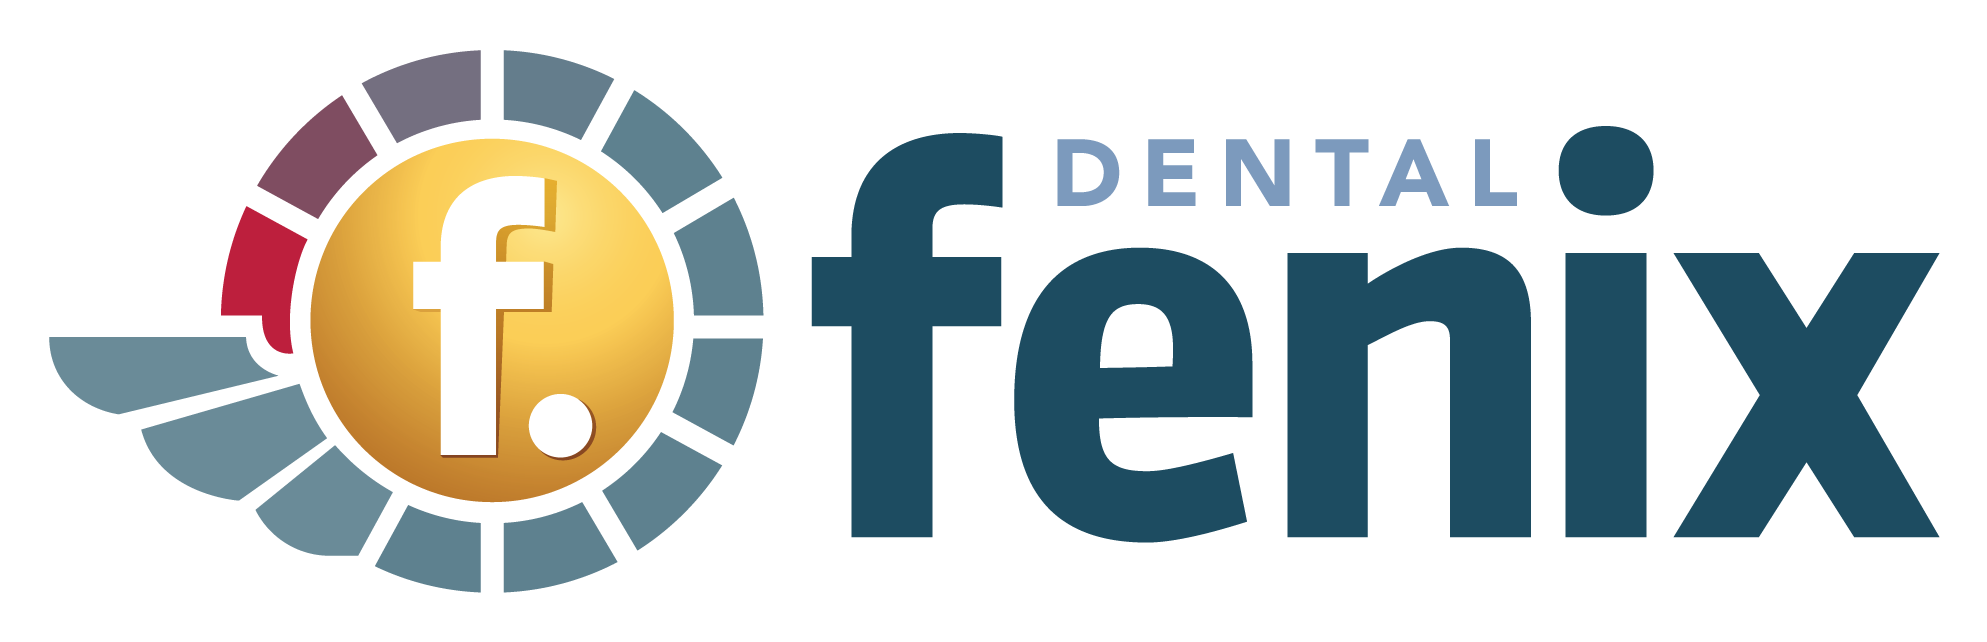 Dental Fenix